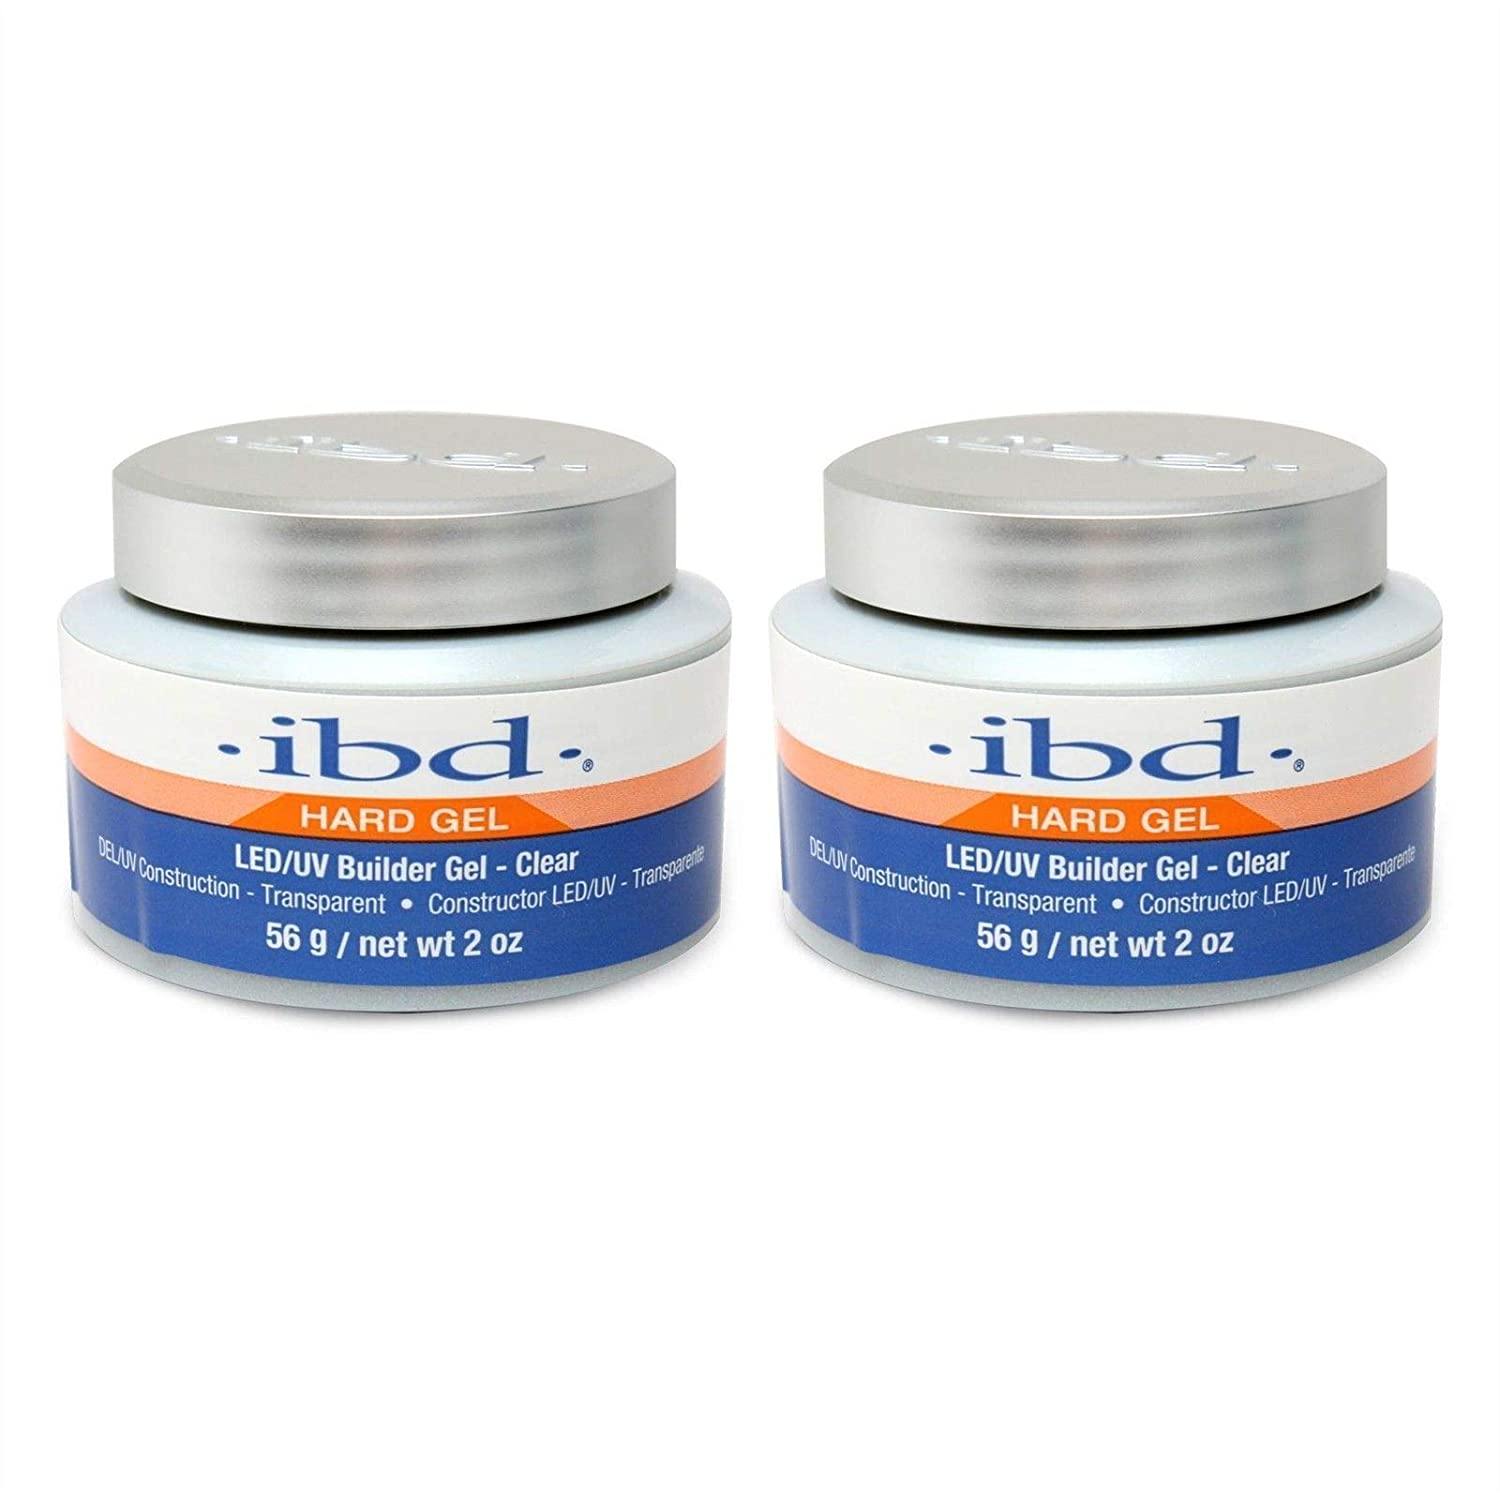 IBD Hard Gel LED/UV Builder Gel Clear 56 g / 2oz, 2 pcs - Sanida Beauty